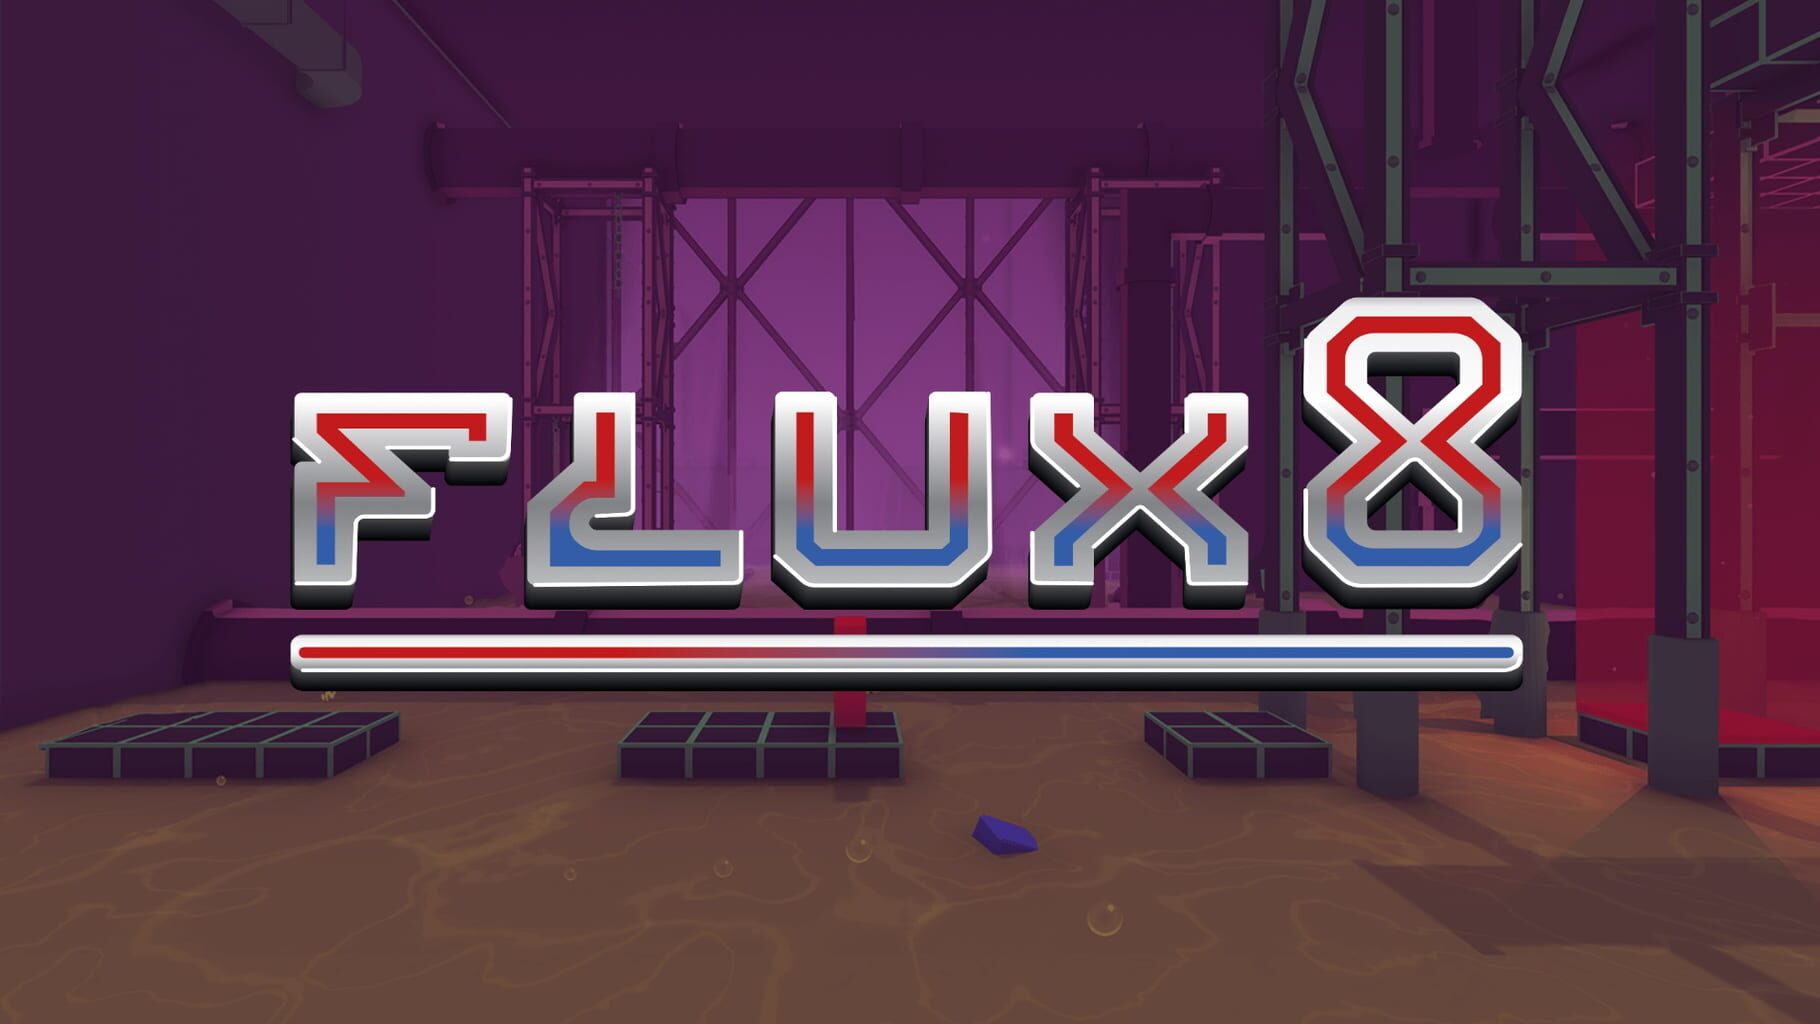 Flux8 artwork